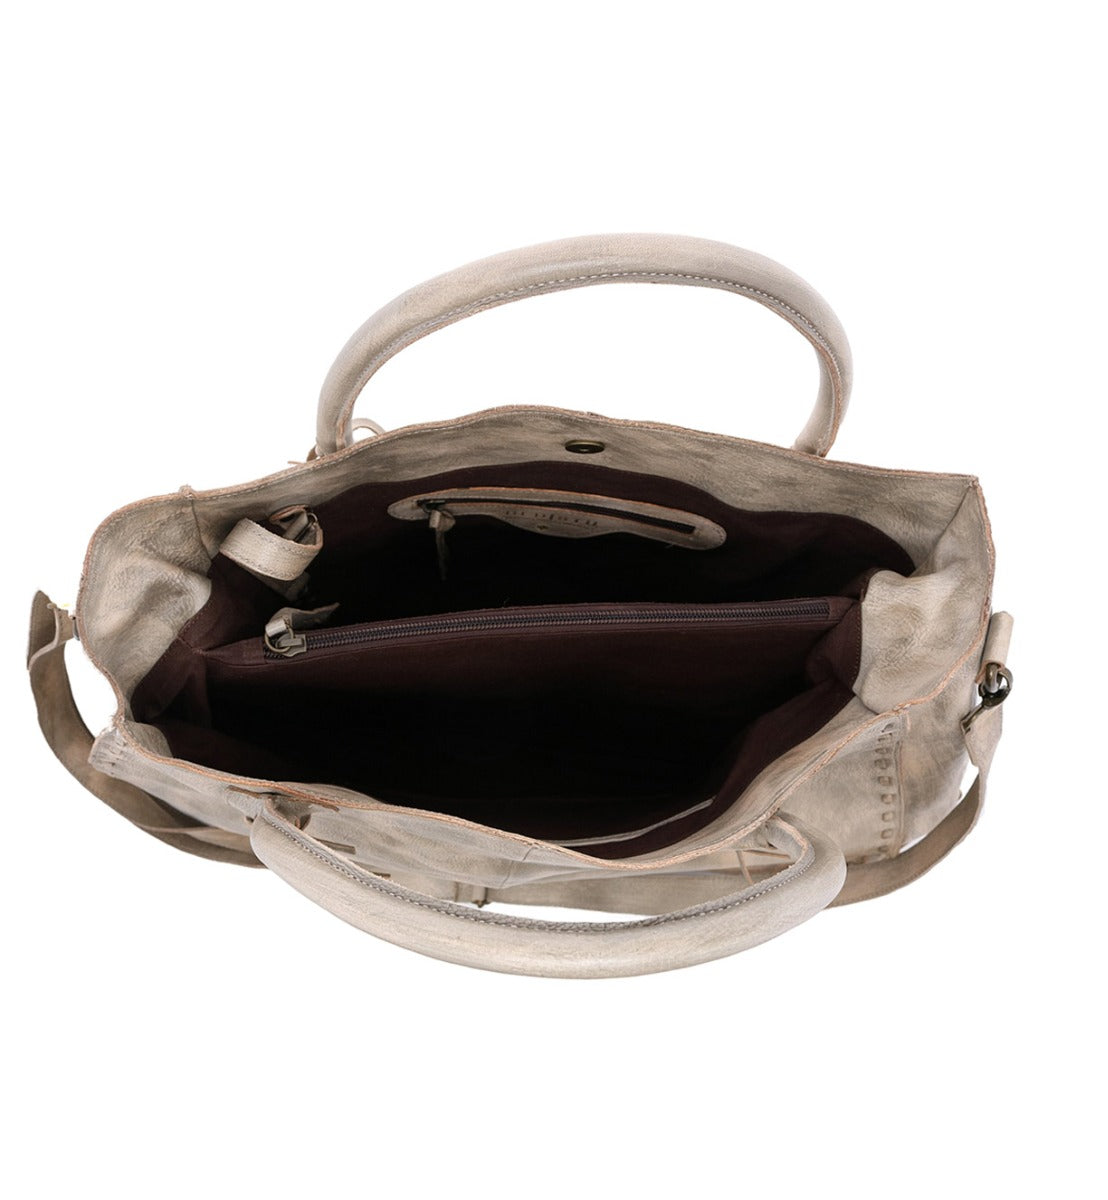 The inside of a Rockaway handbag with a zipper by Bed Stu.